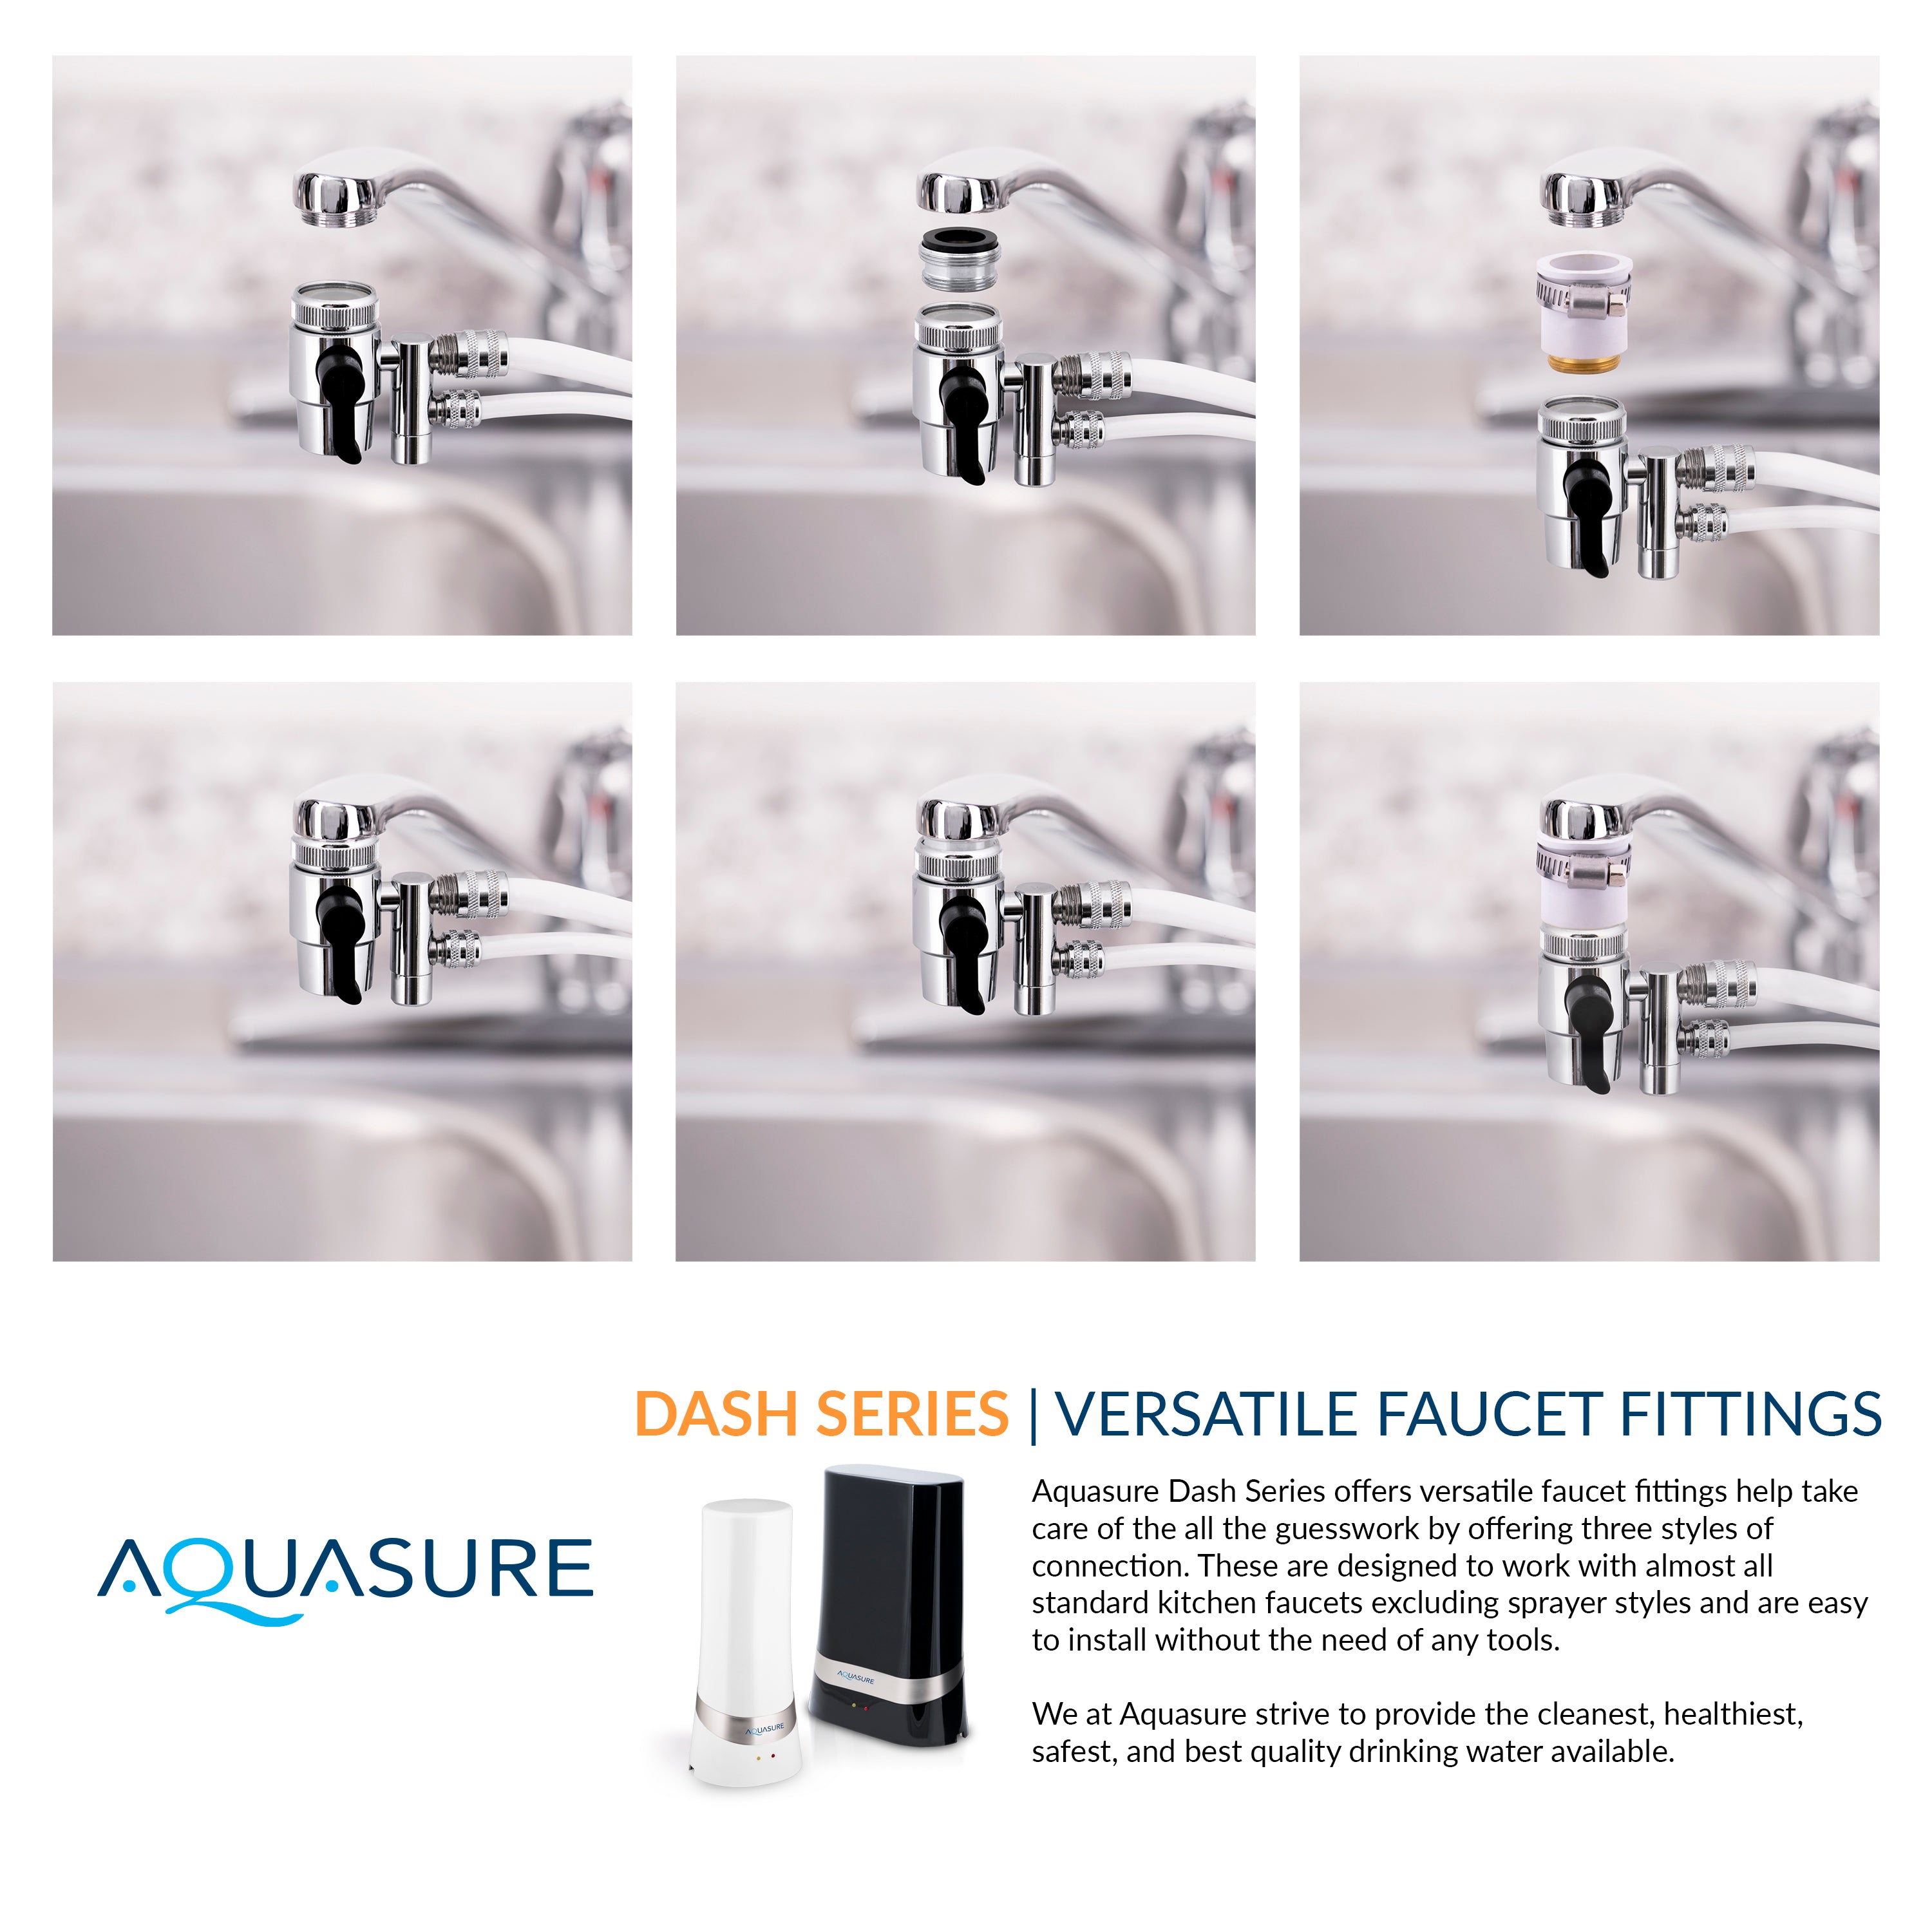 Dash Series Countertop Water Filter | Microban Carbon Block Filtration